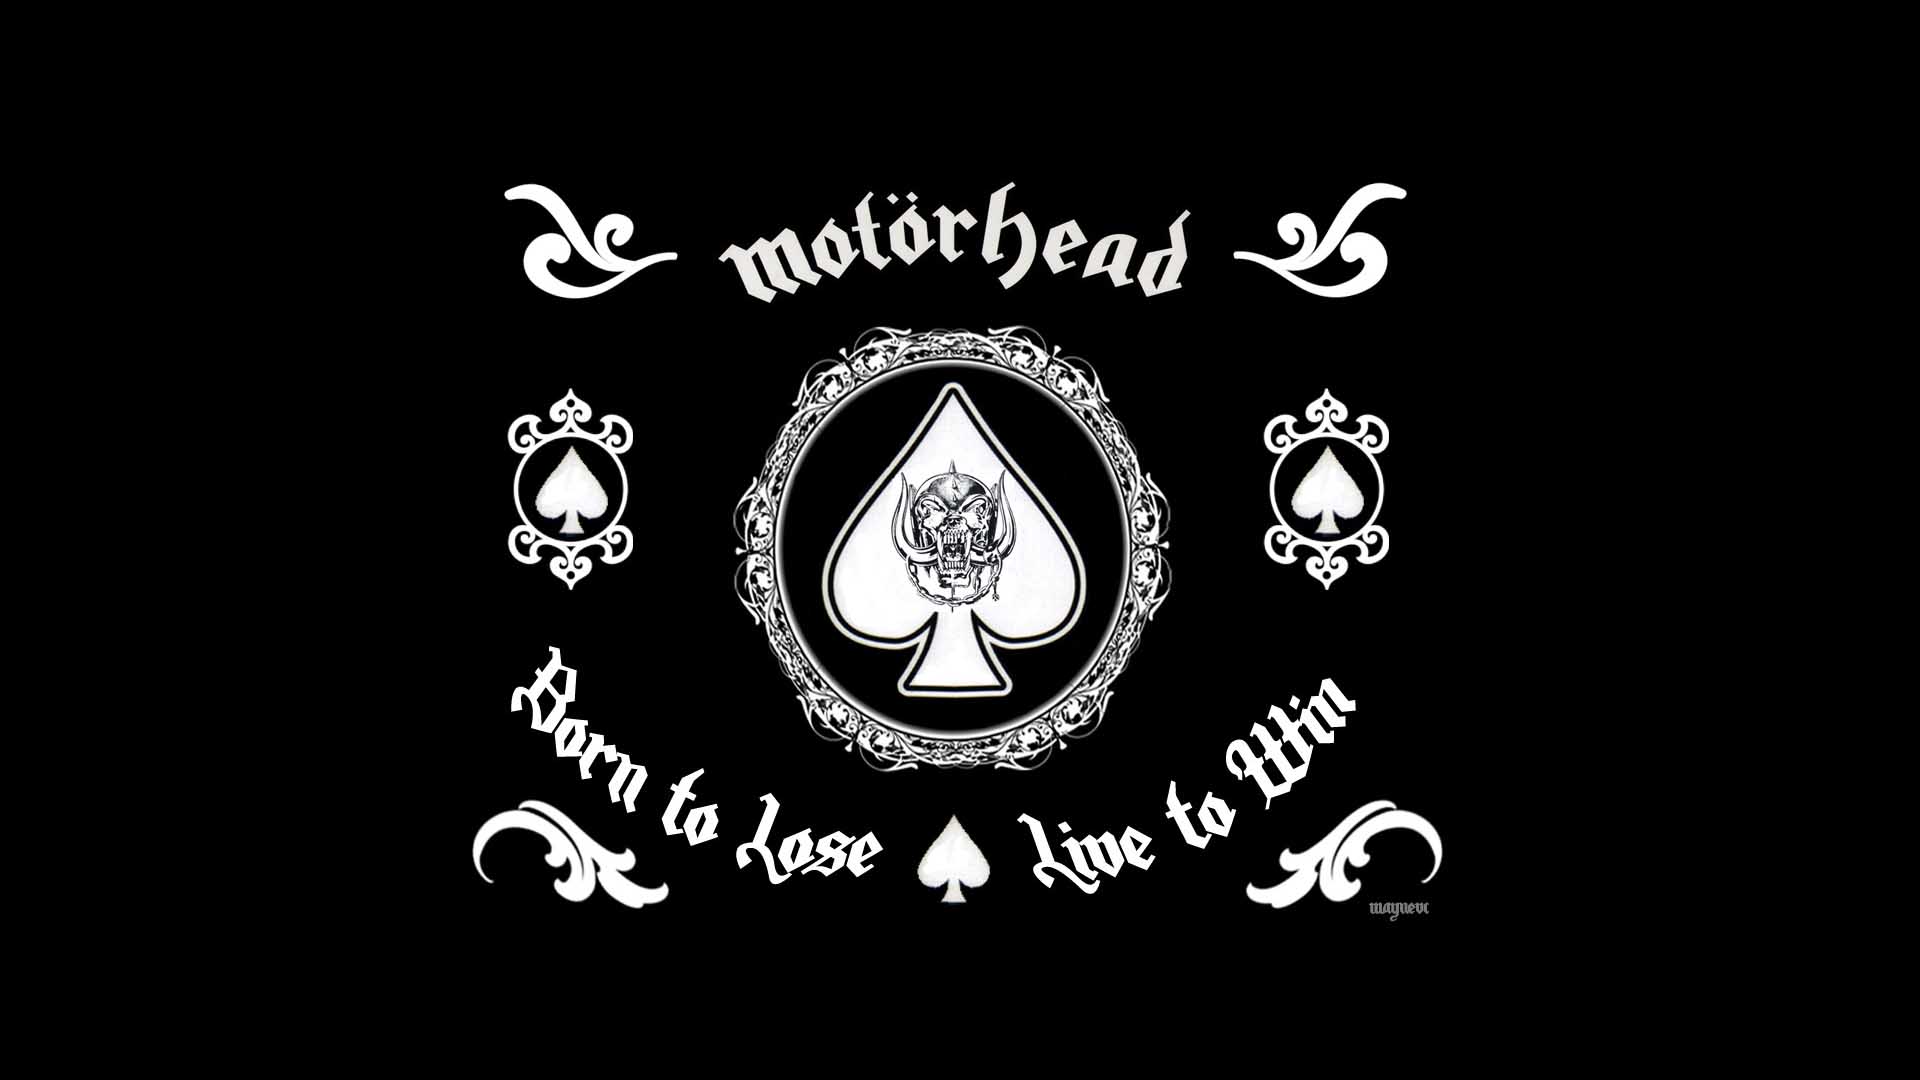 Motorhead Ace Of Spades Monochrome Quote Black Black Background 1920x1080